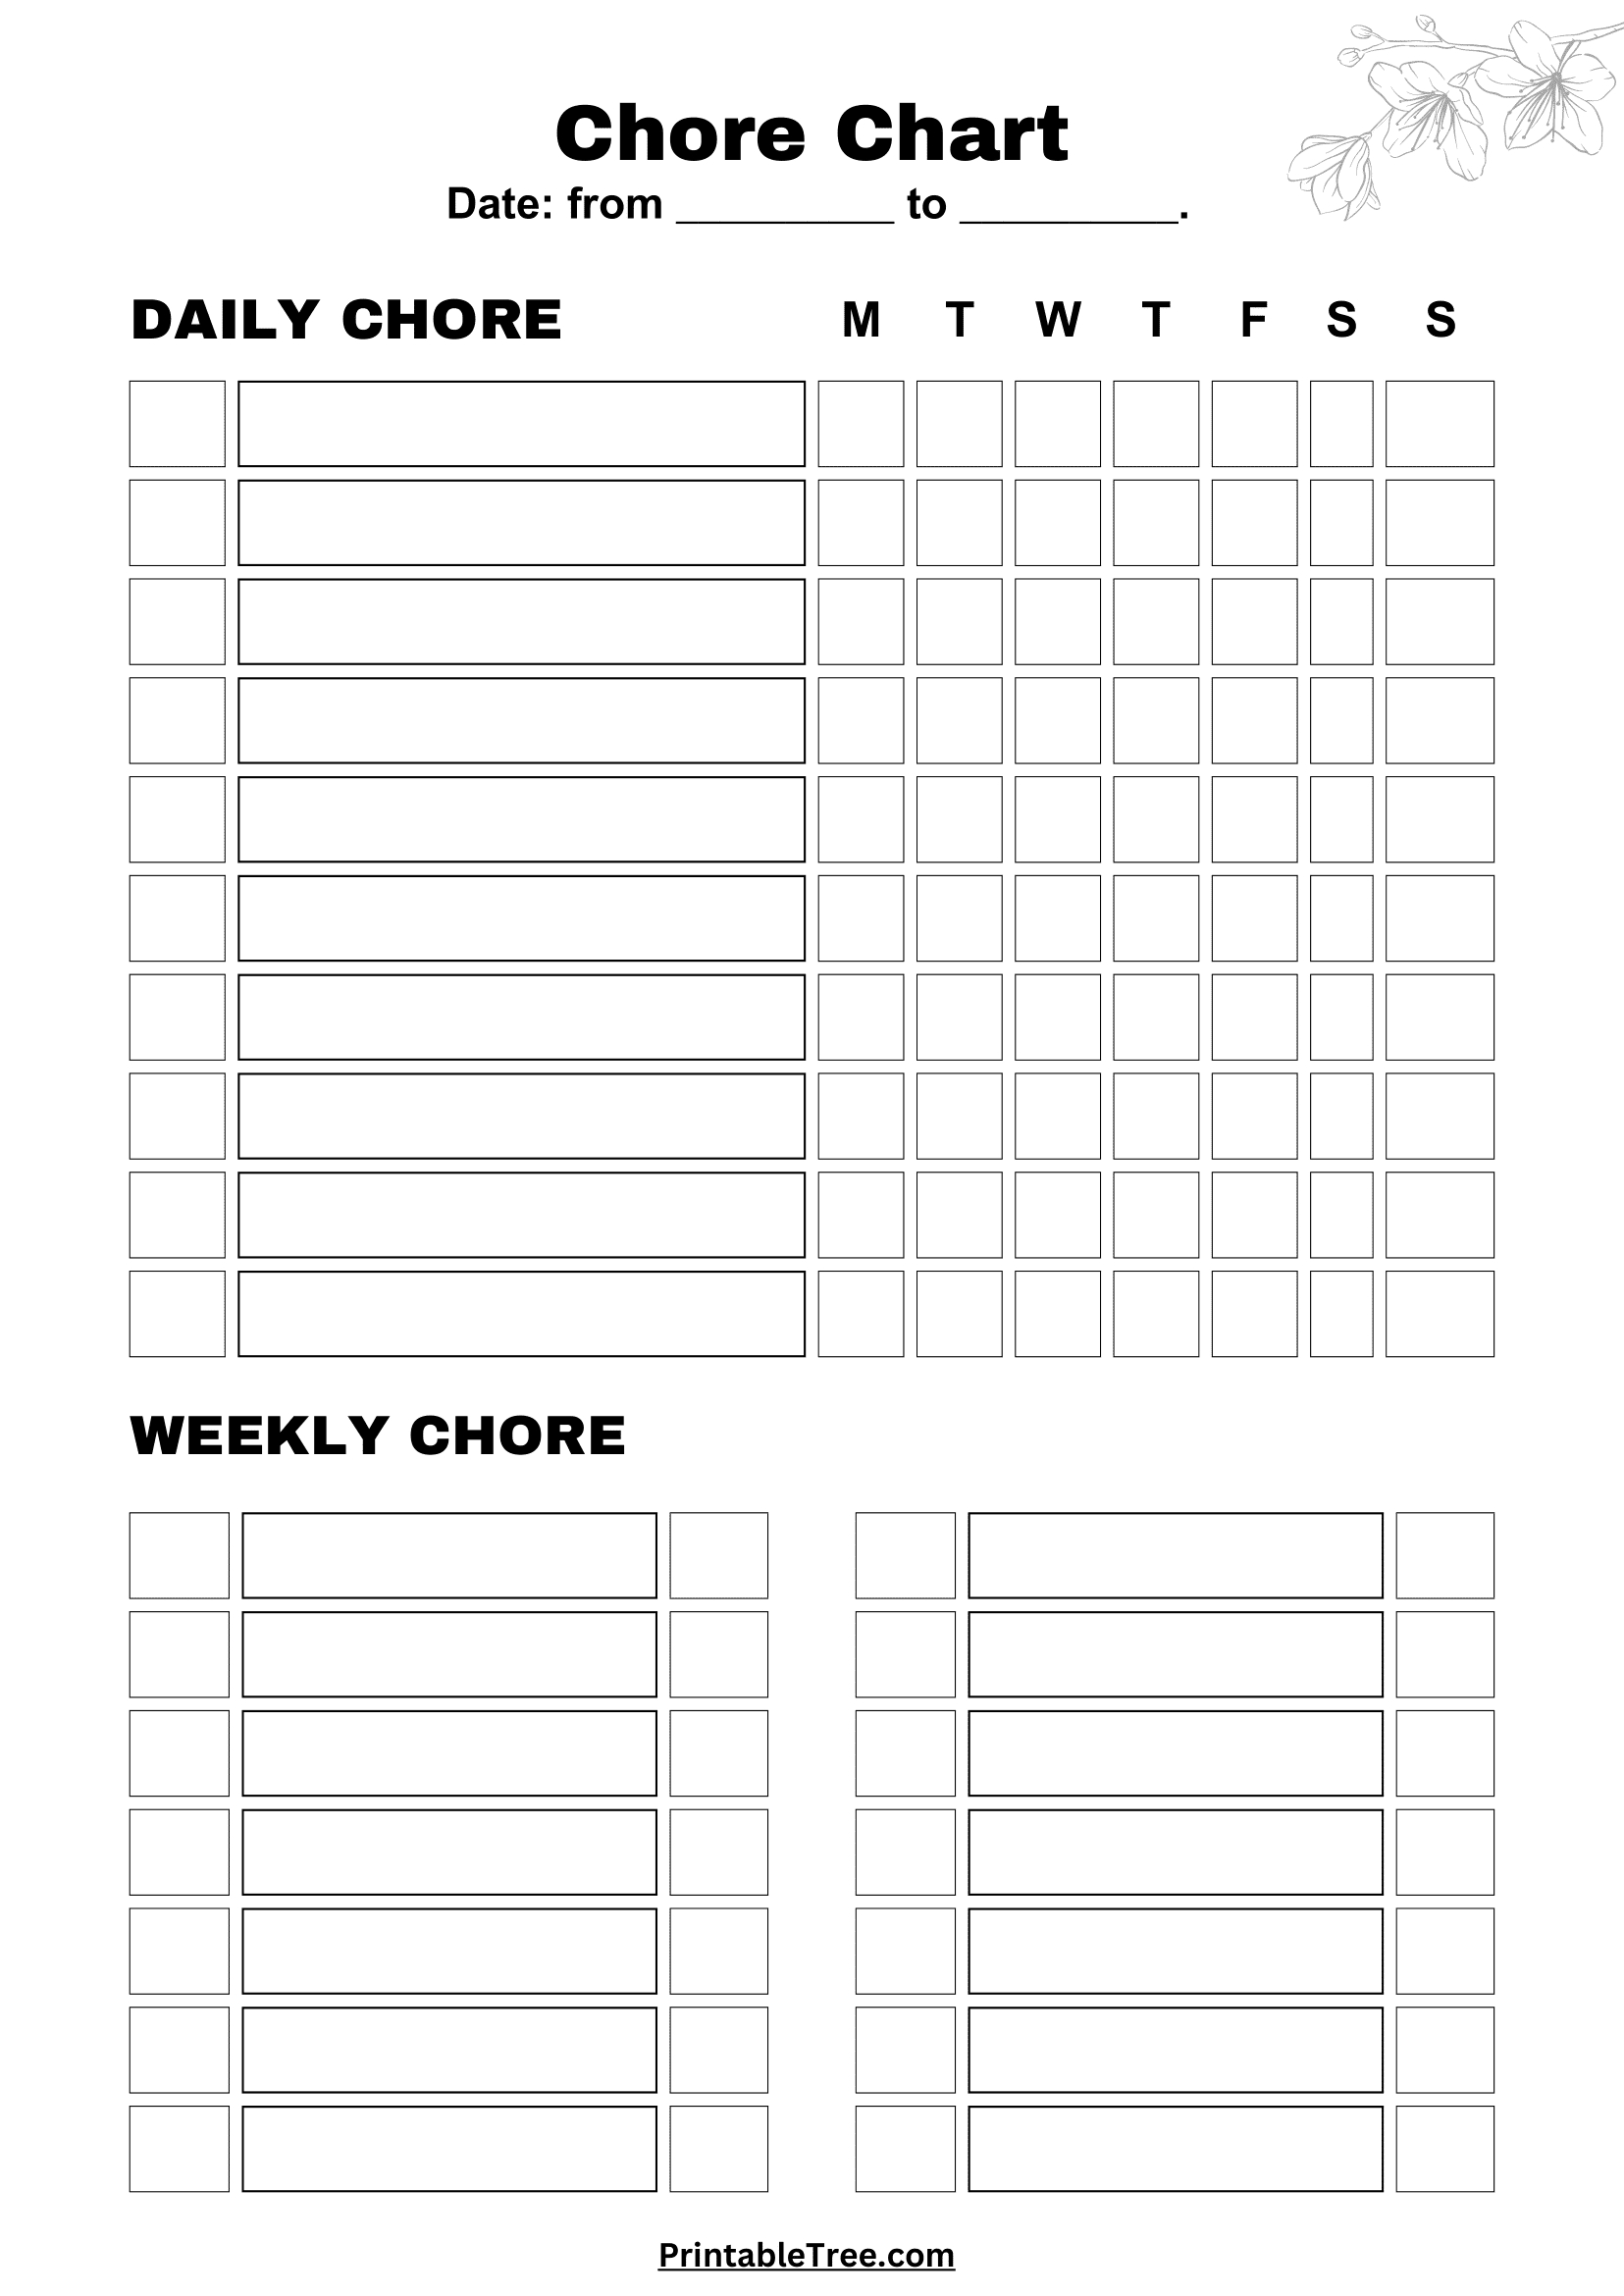 Free Printable Chore Chart Pdf Template For Kids regarding Charts Free Printable